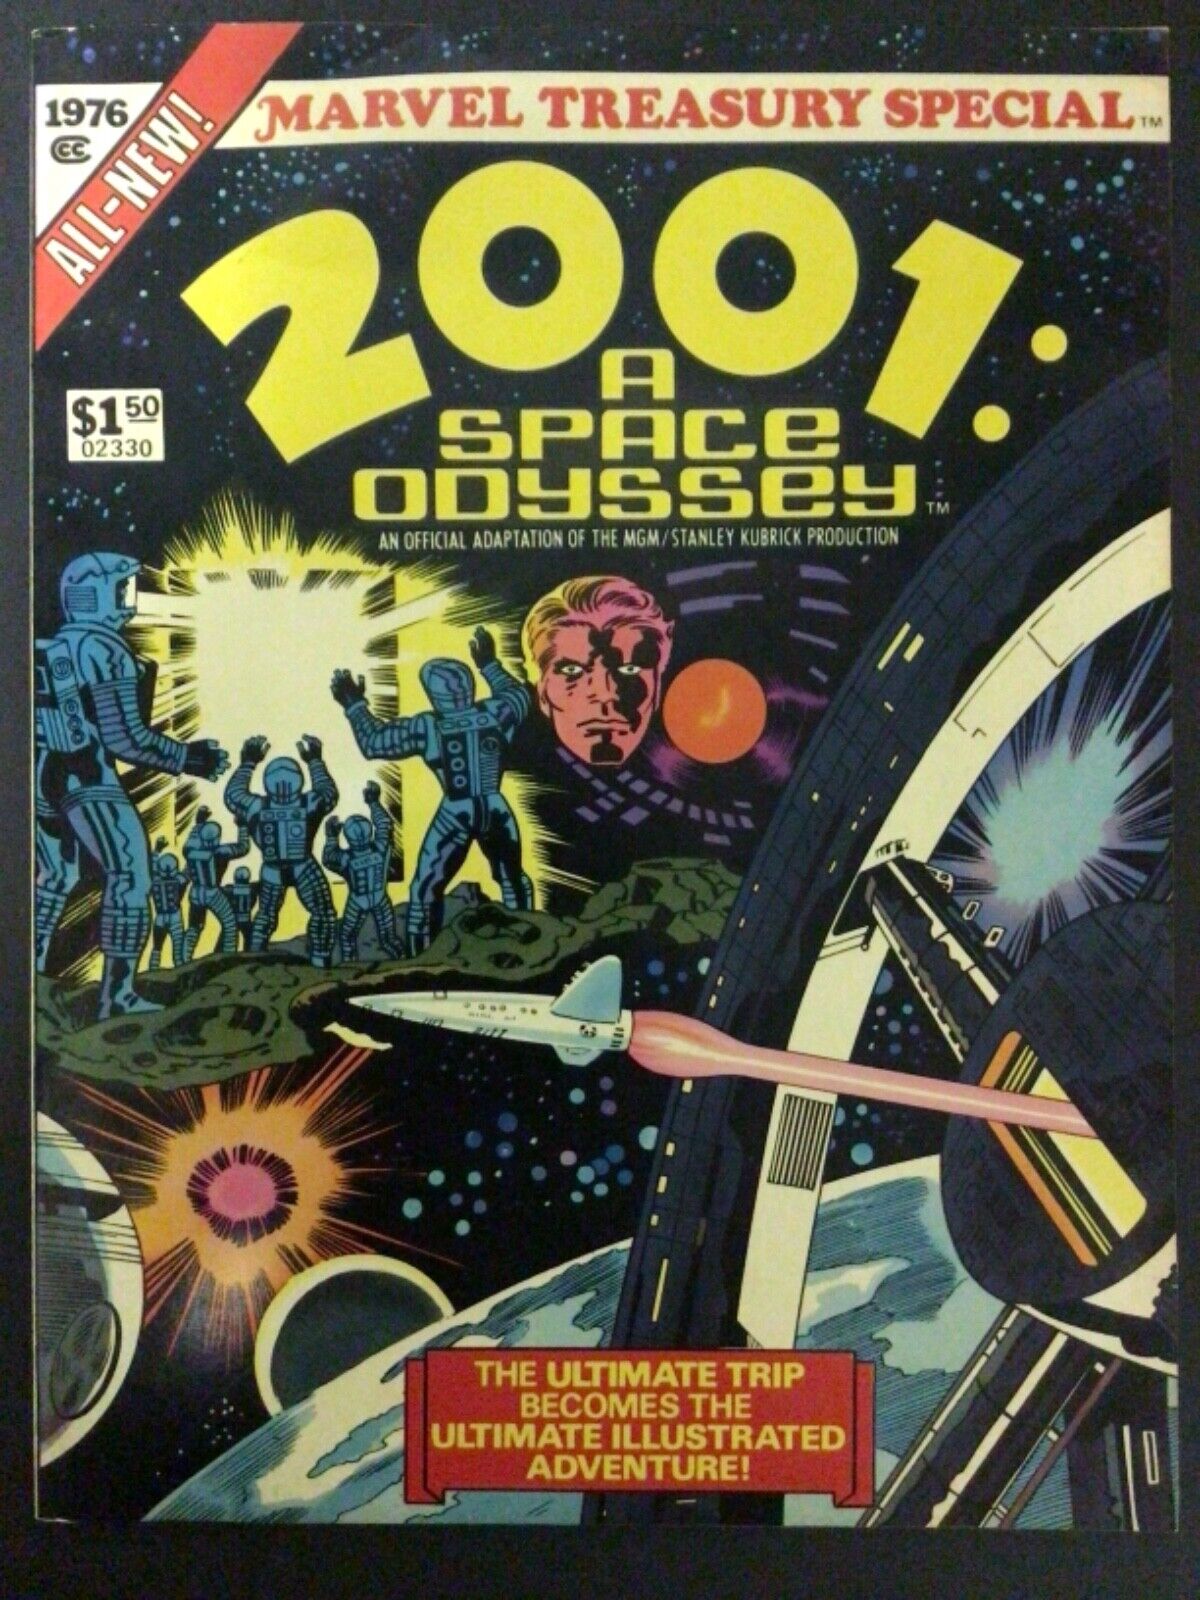 2001 A Space Odyssey Marvel Treasury Special FN 1976 Marvel